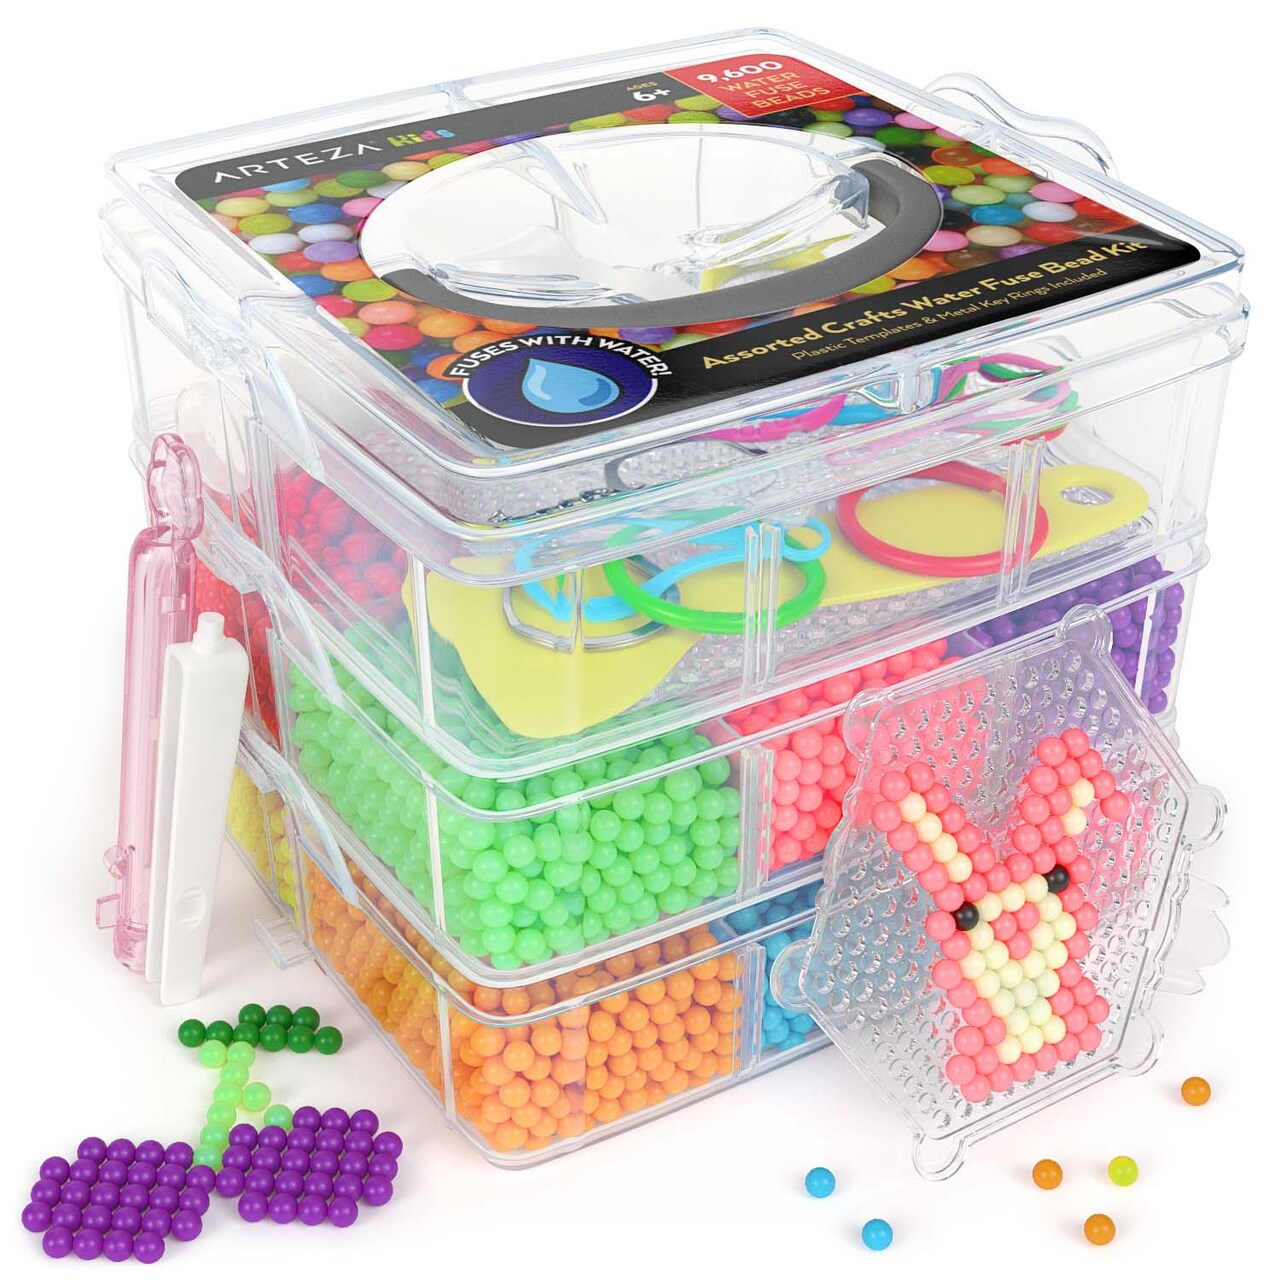 Arteza Kids Water Fuse Beads Kit